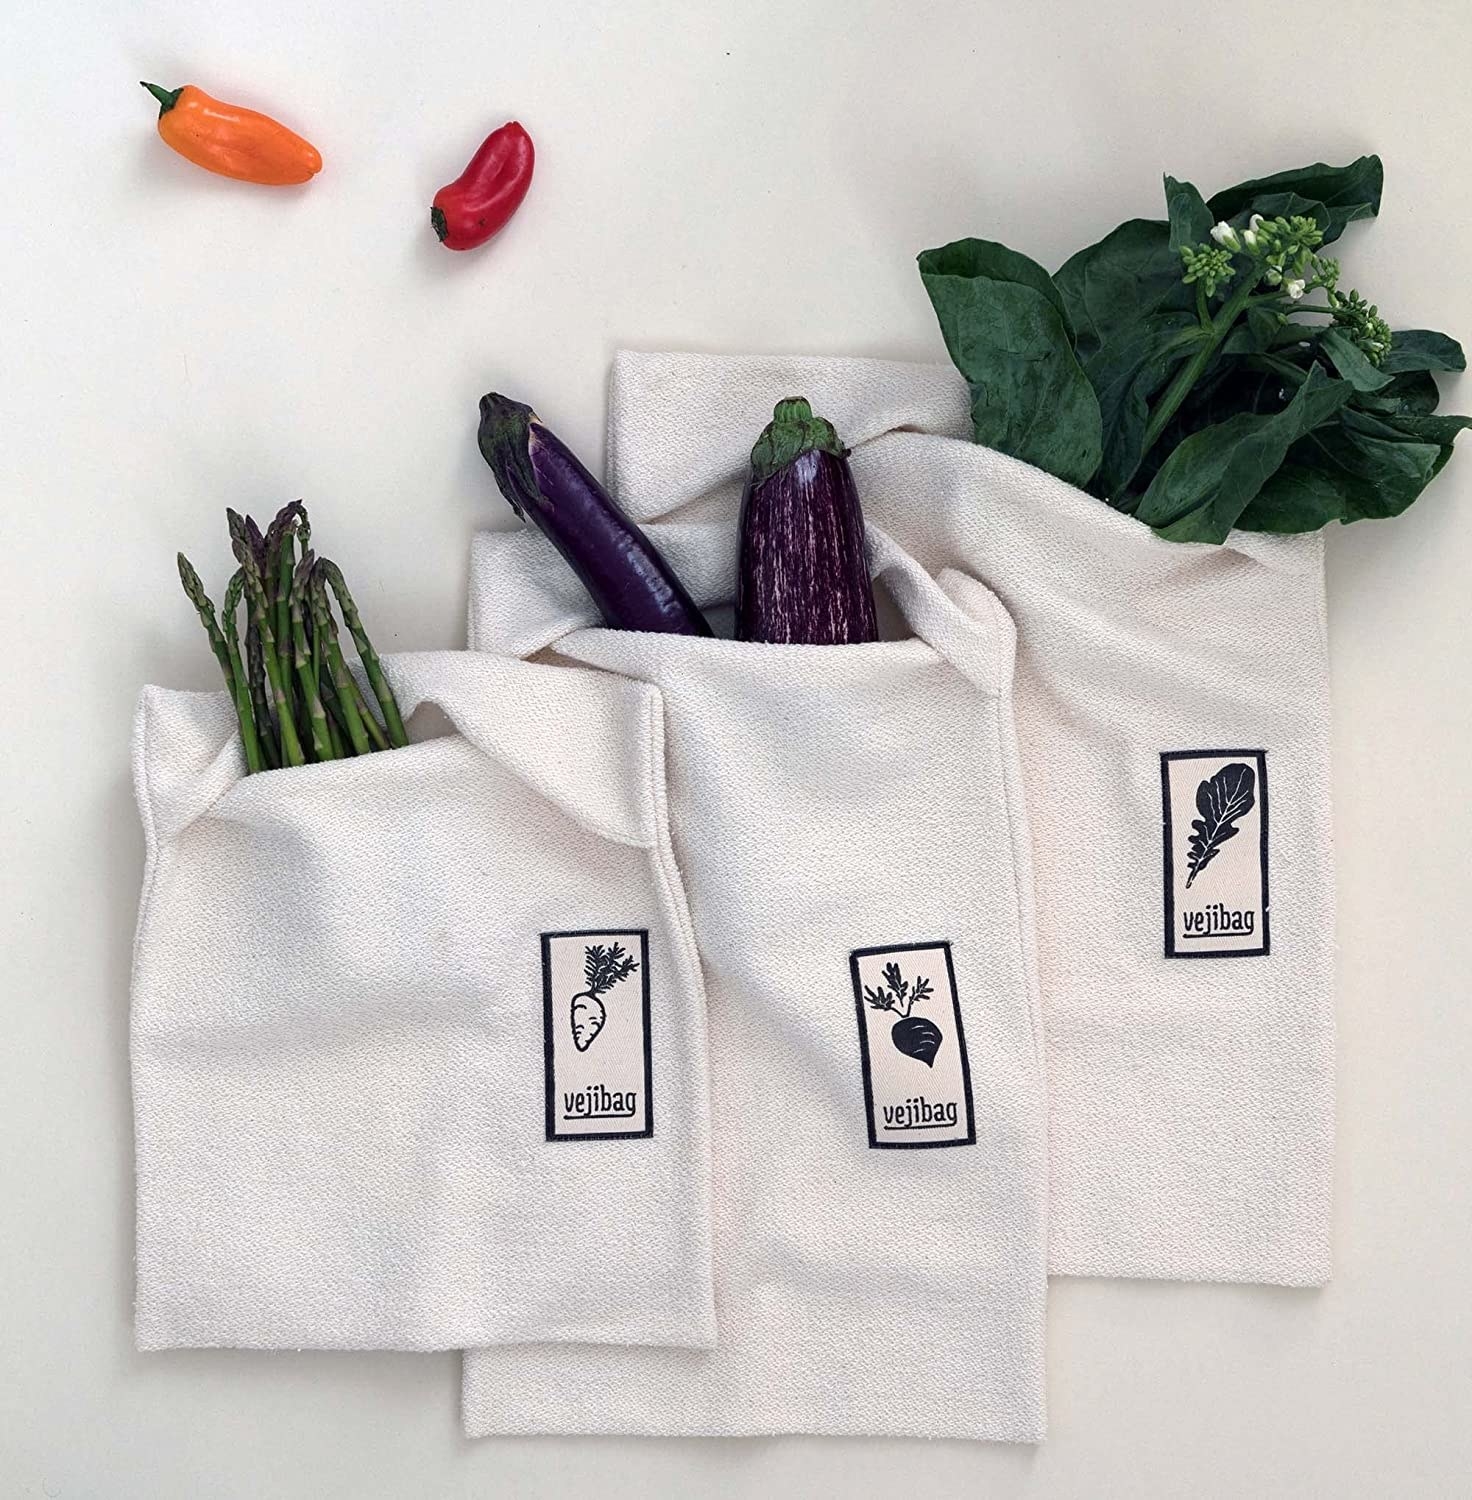 three organic cotton crisper bags holding asparagus, eggplant, and greens